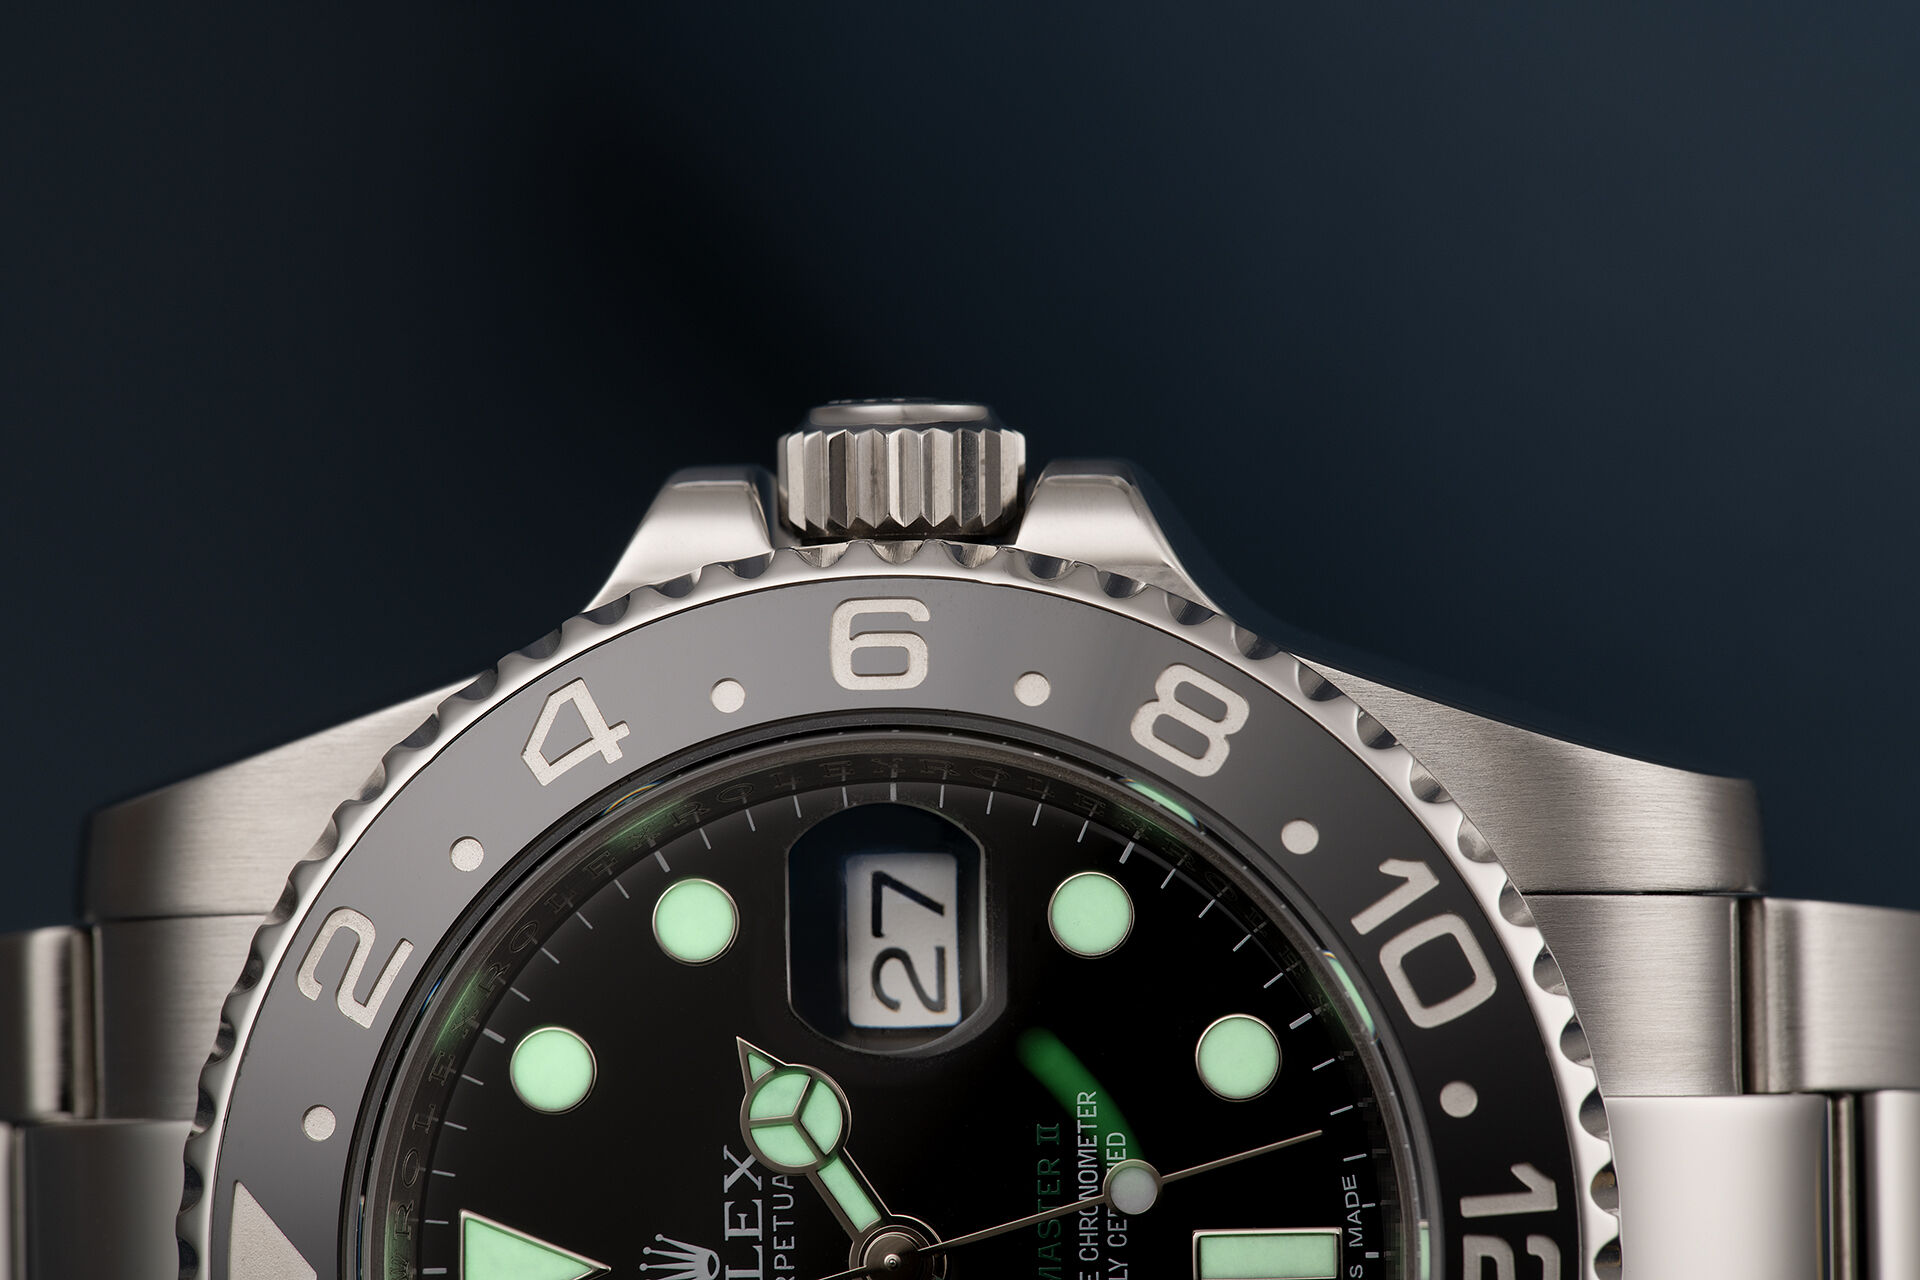 ref 116710LN | Serviced by Rolex | Rolex GMT-Master II